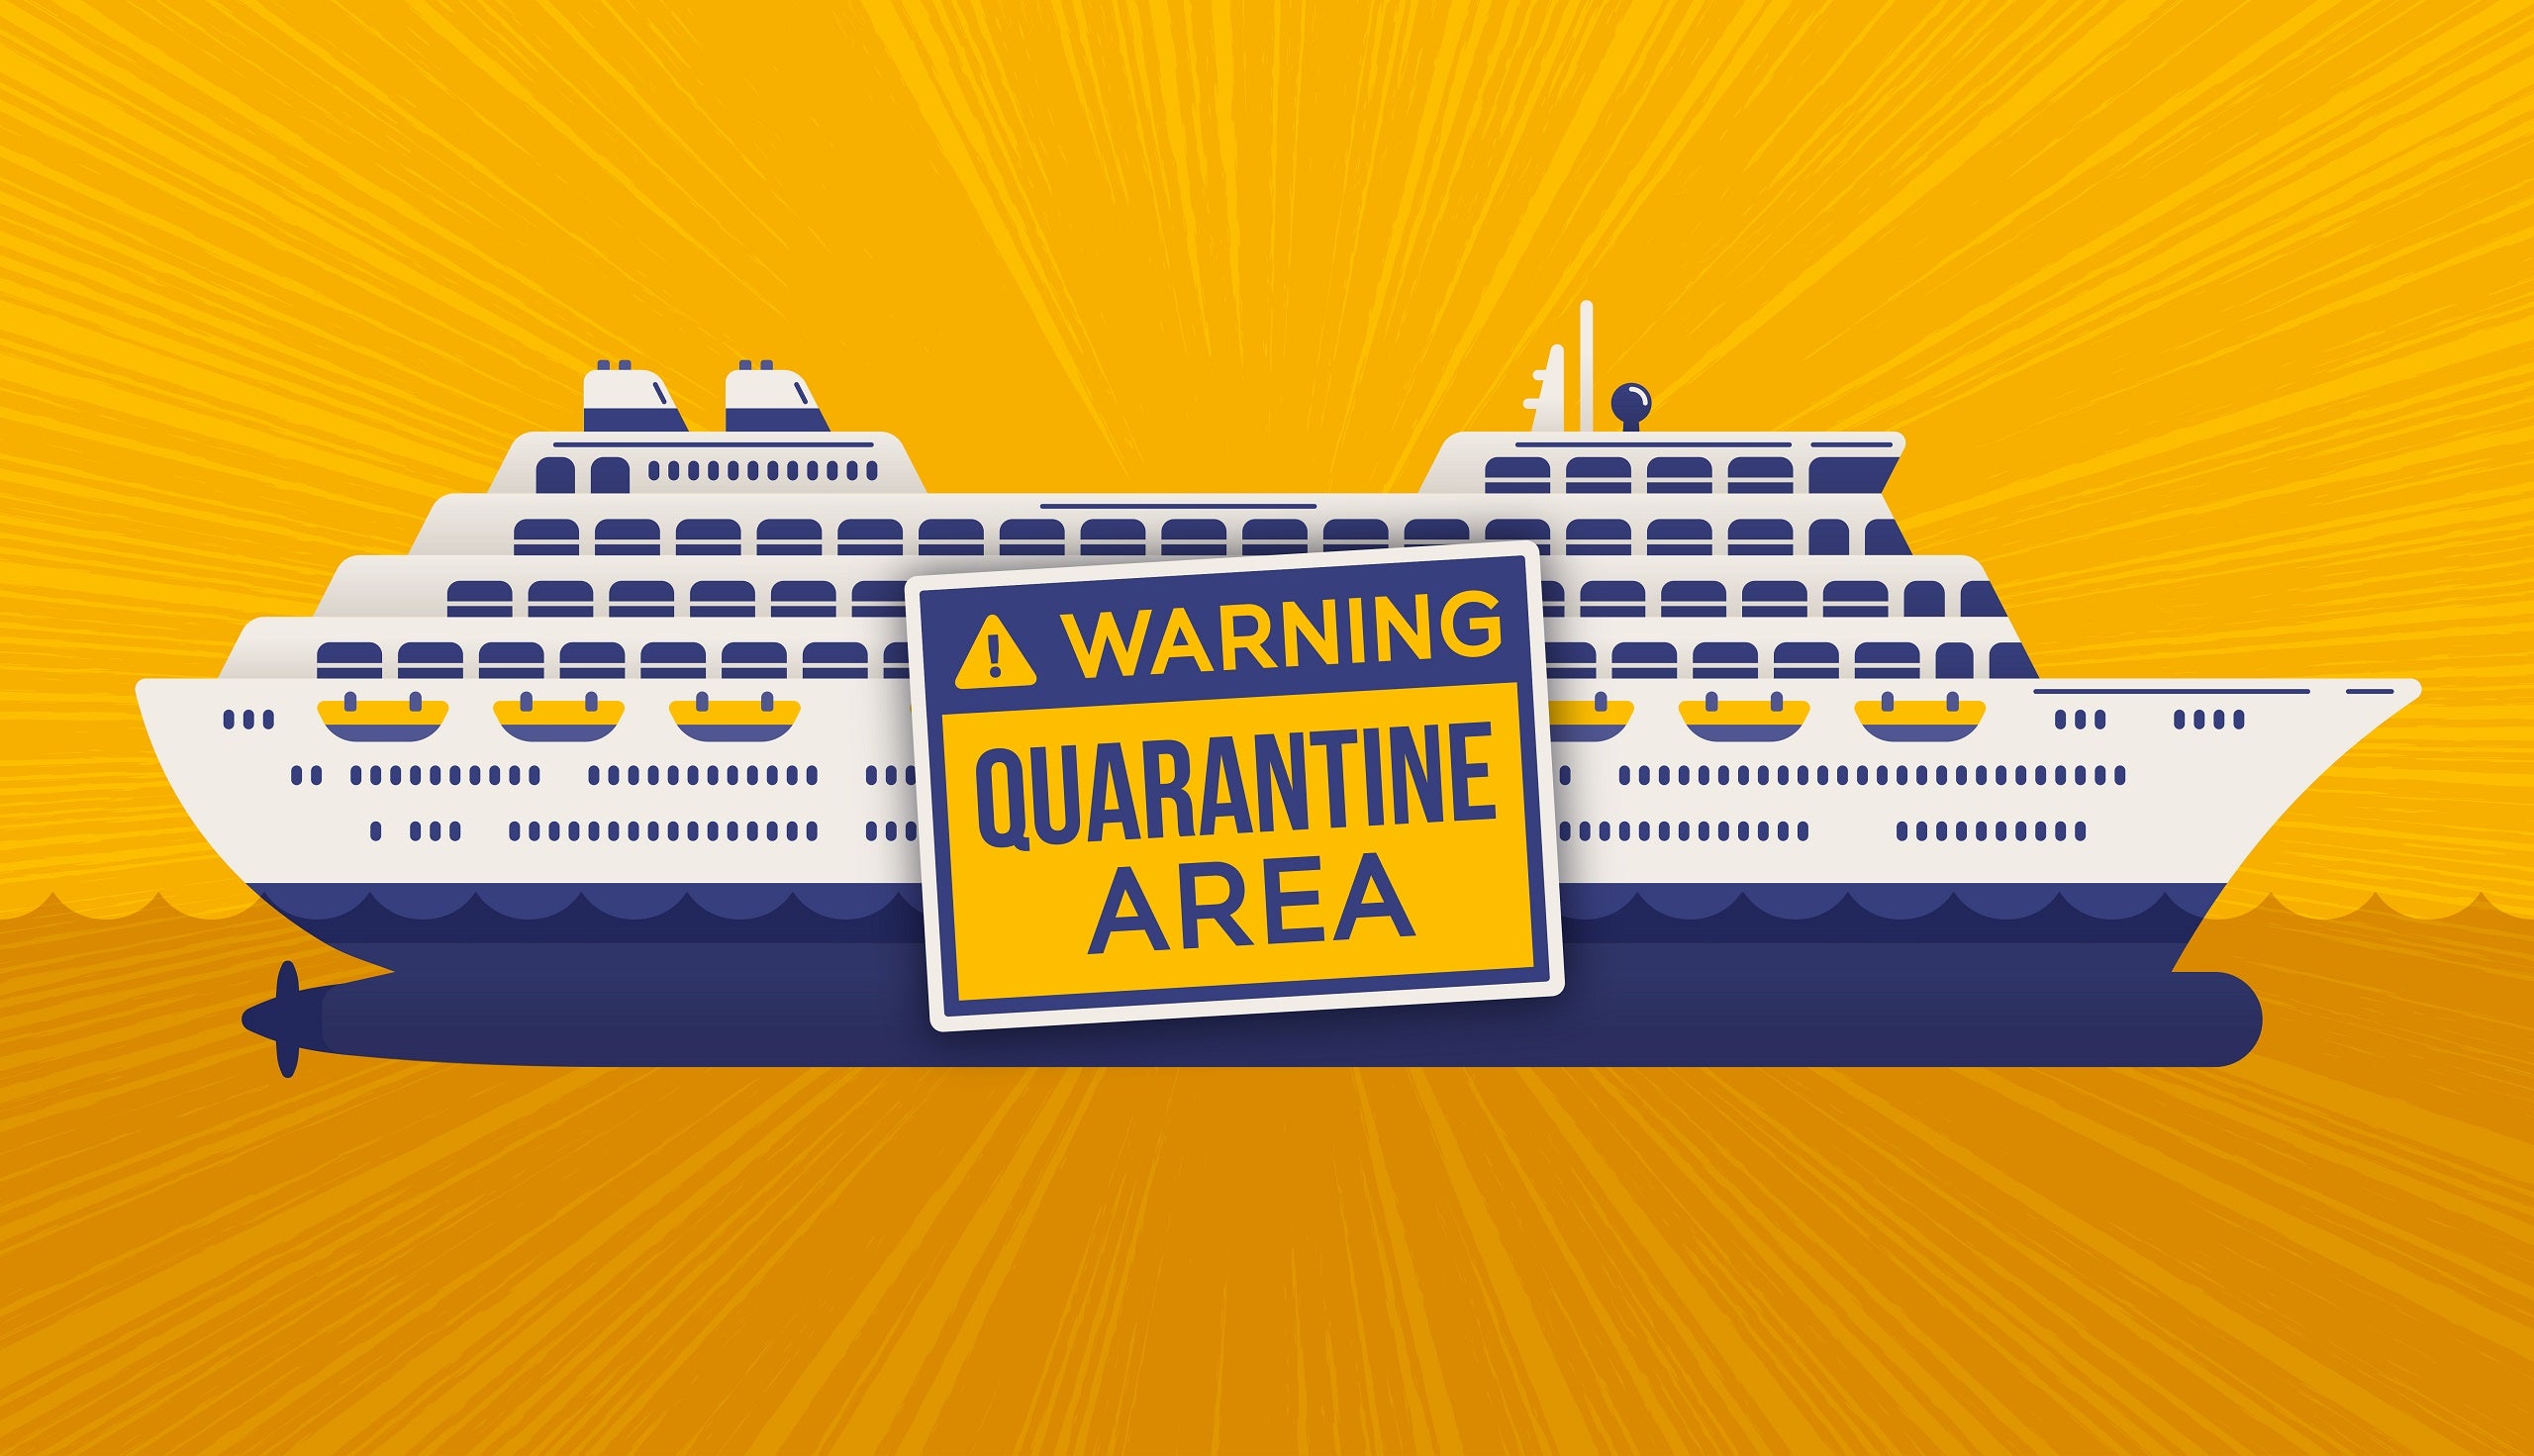 disney cruise ship quarantined